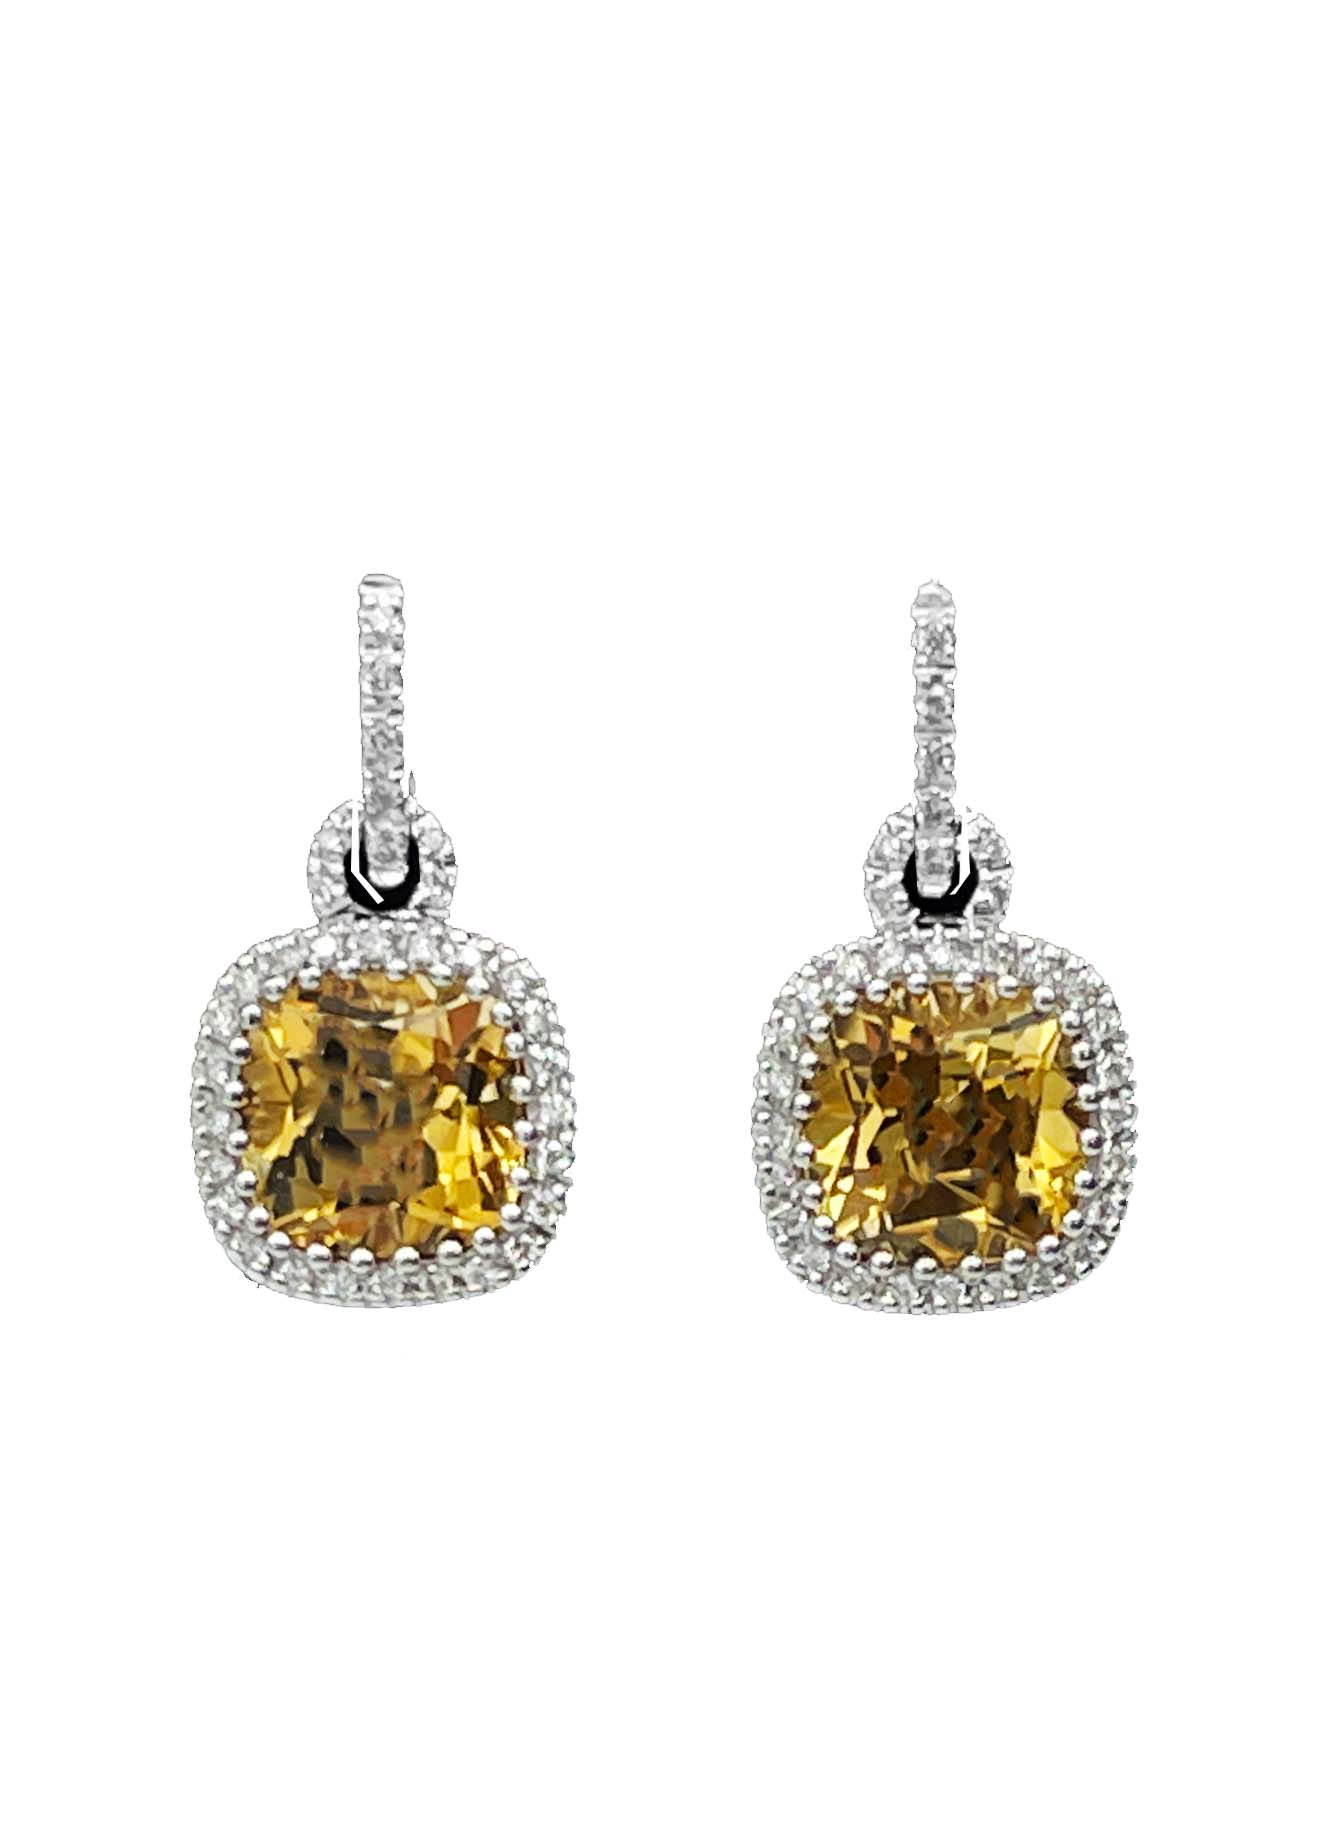 18k White Gold Topaz and Diamond Square Drops Earrings Image